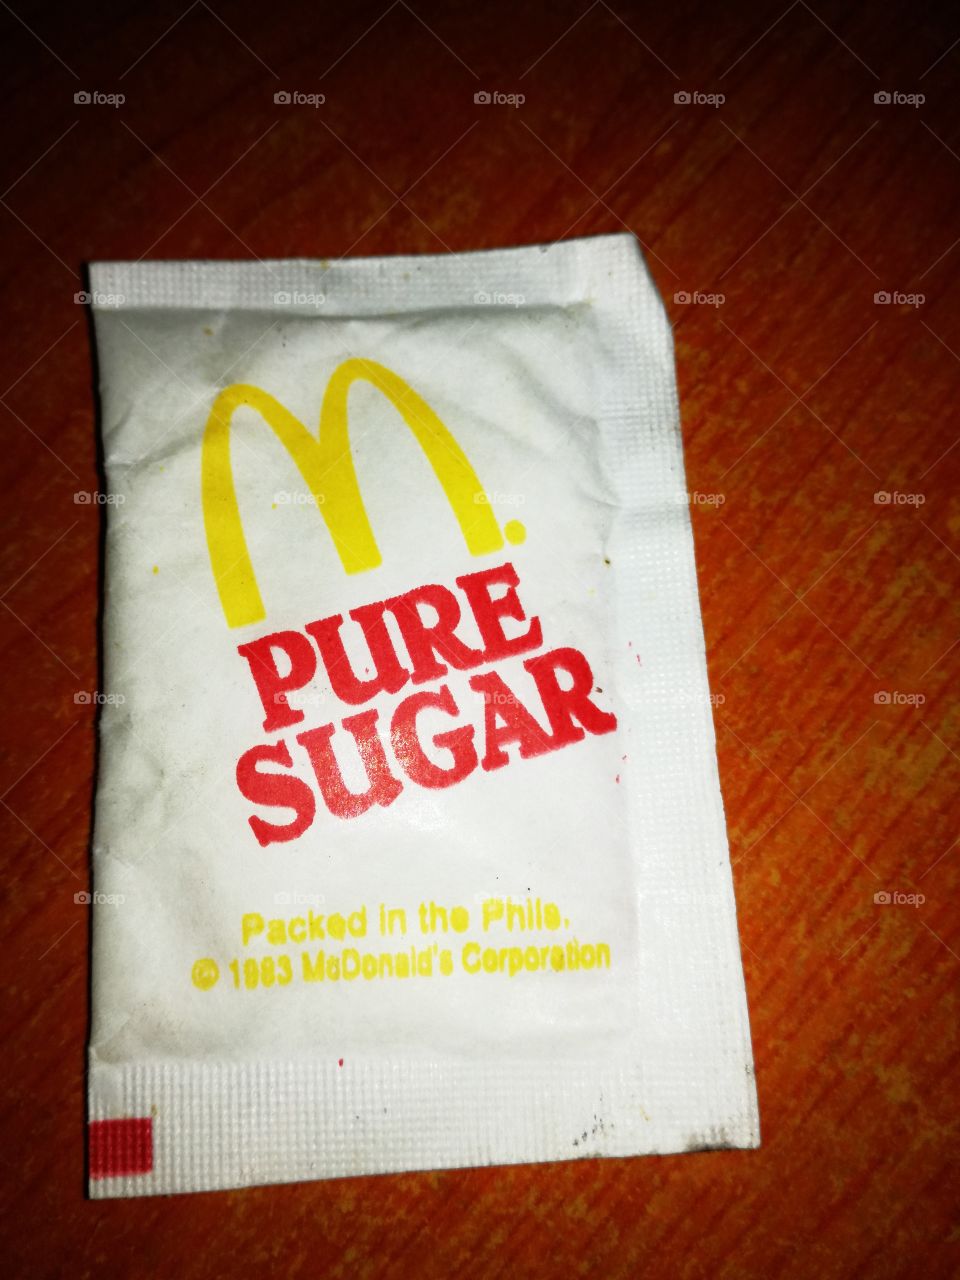 pure sugar from macdo, isn't it? 😅😂😅